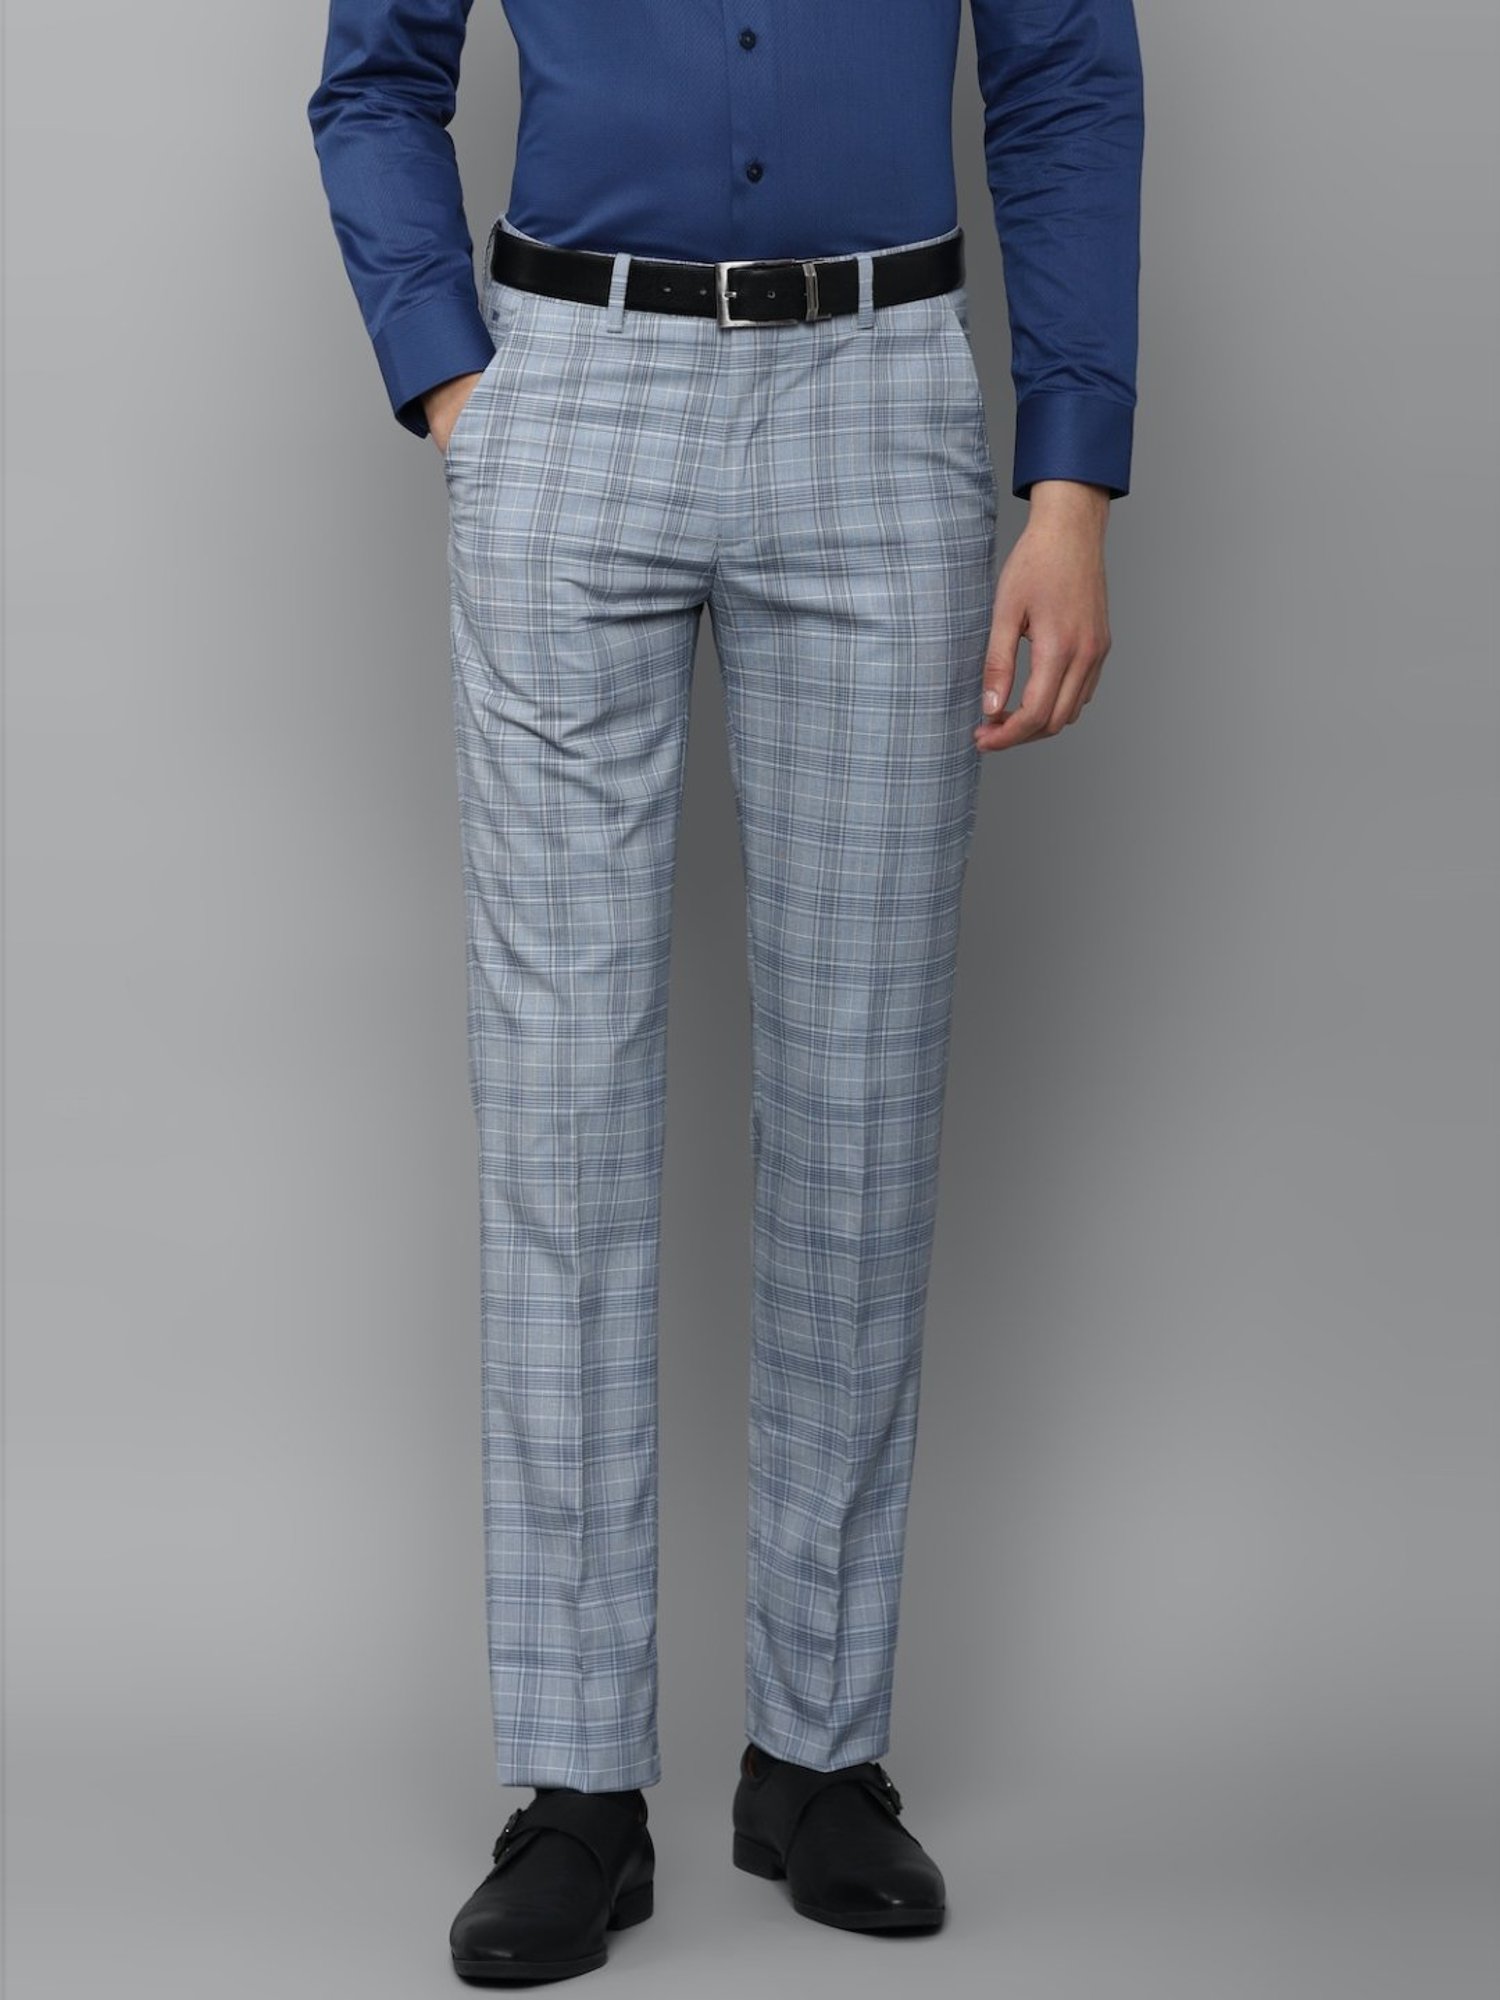 Buy Arrow Glen Check Formal Trousers - NNNOW.com